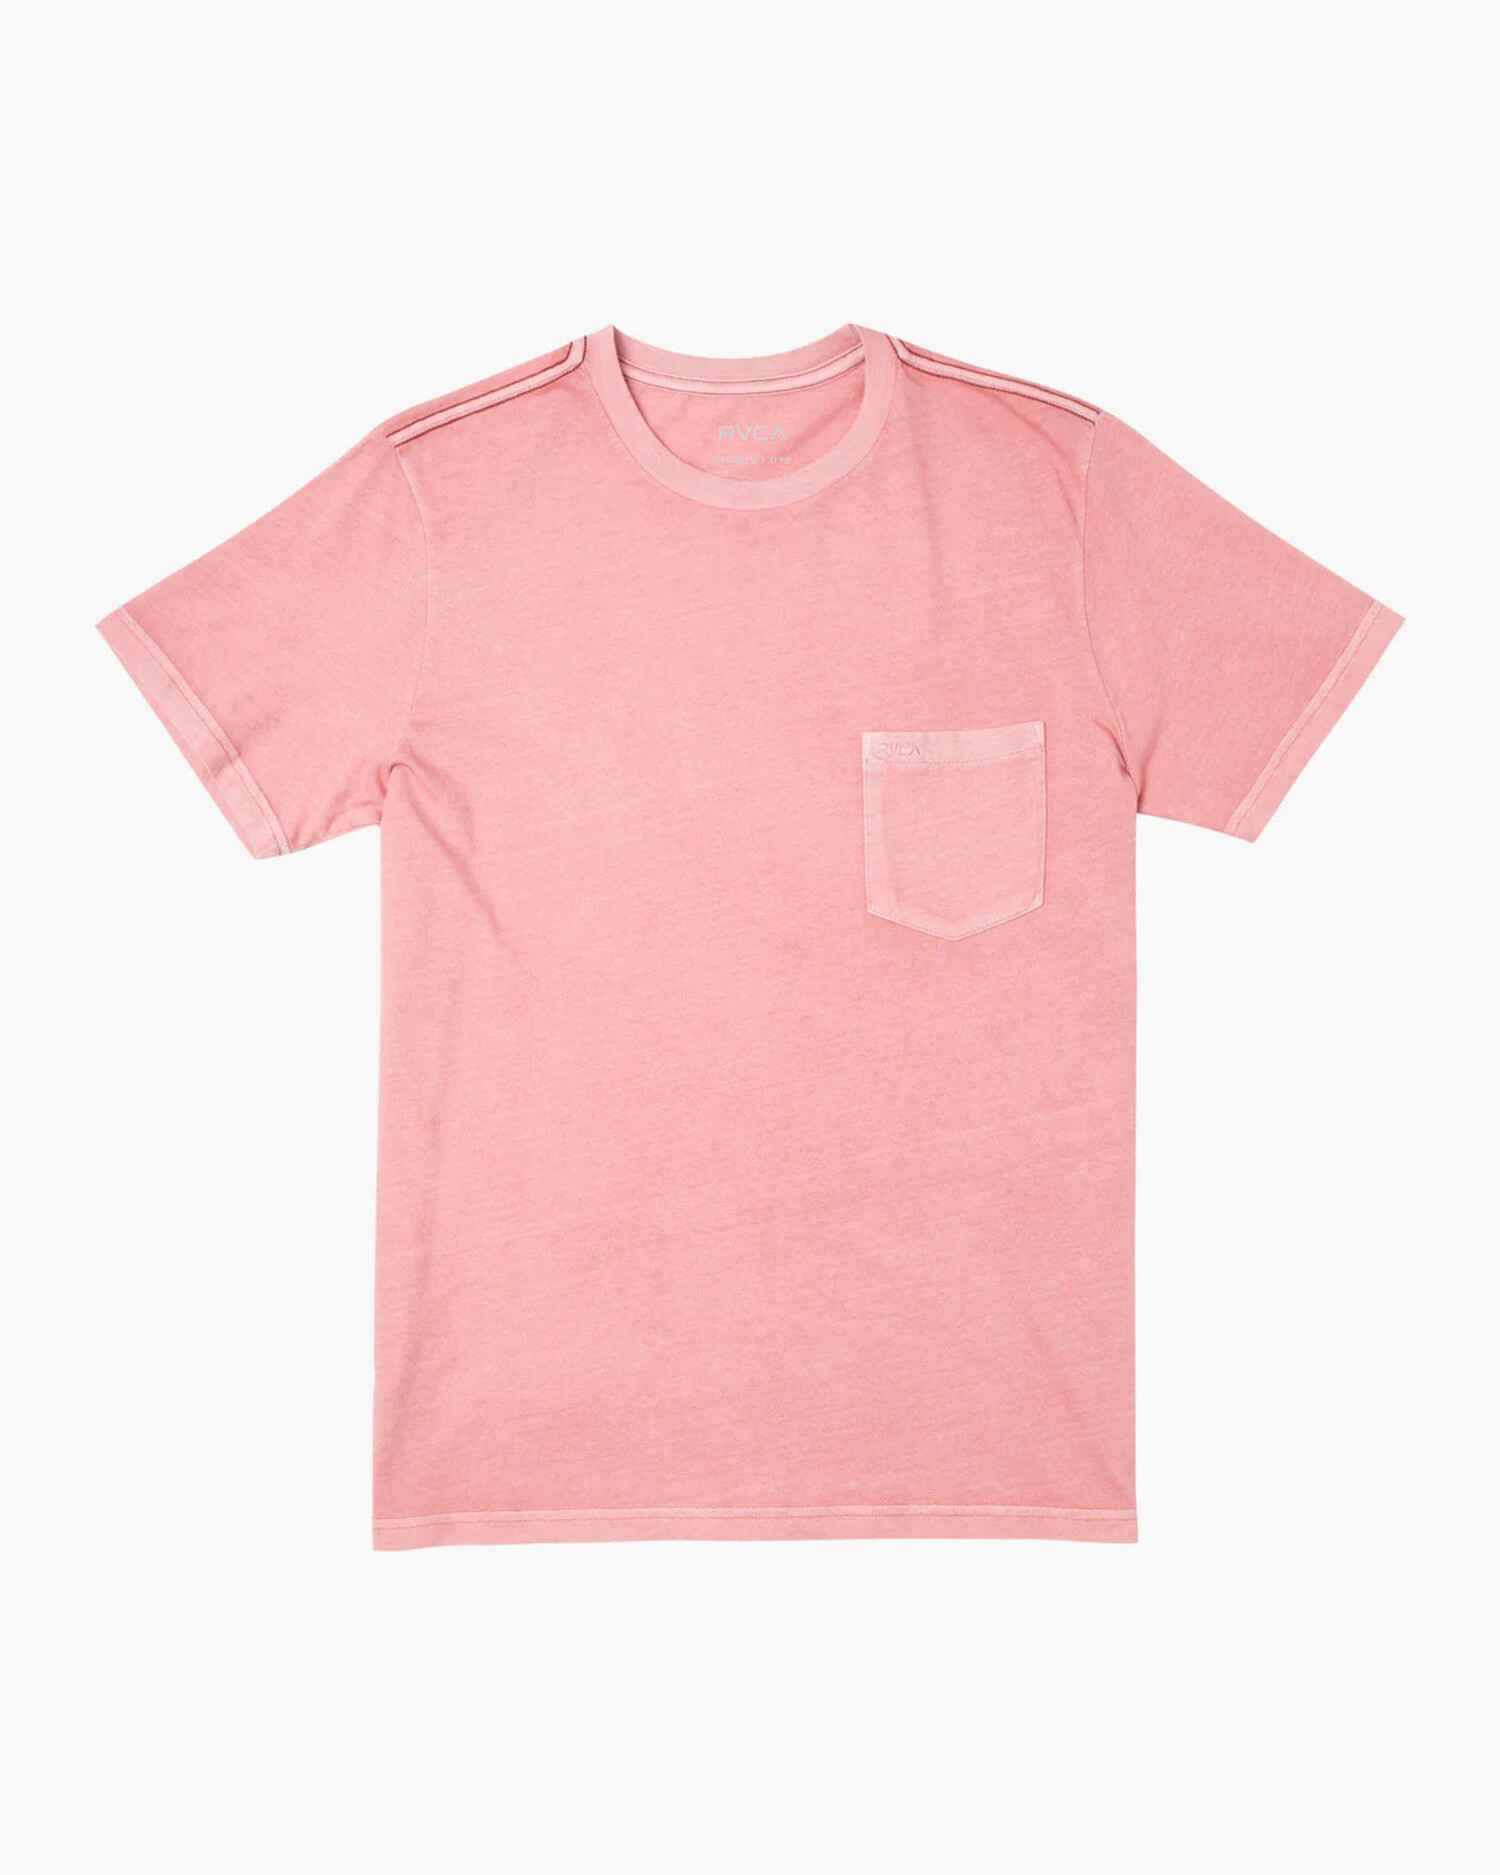 Ptc 2 Pigment SS | Light Pink - The Choice Shop